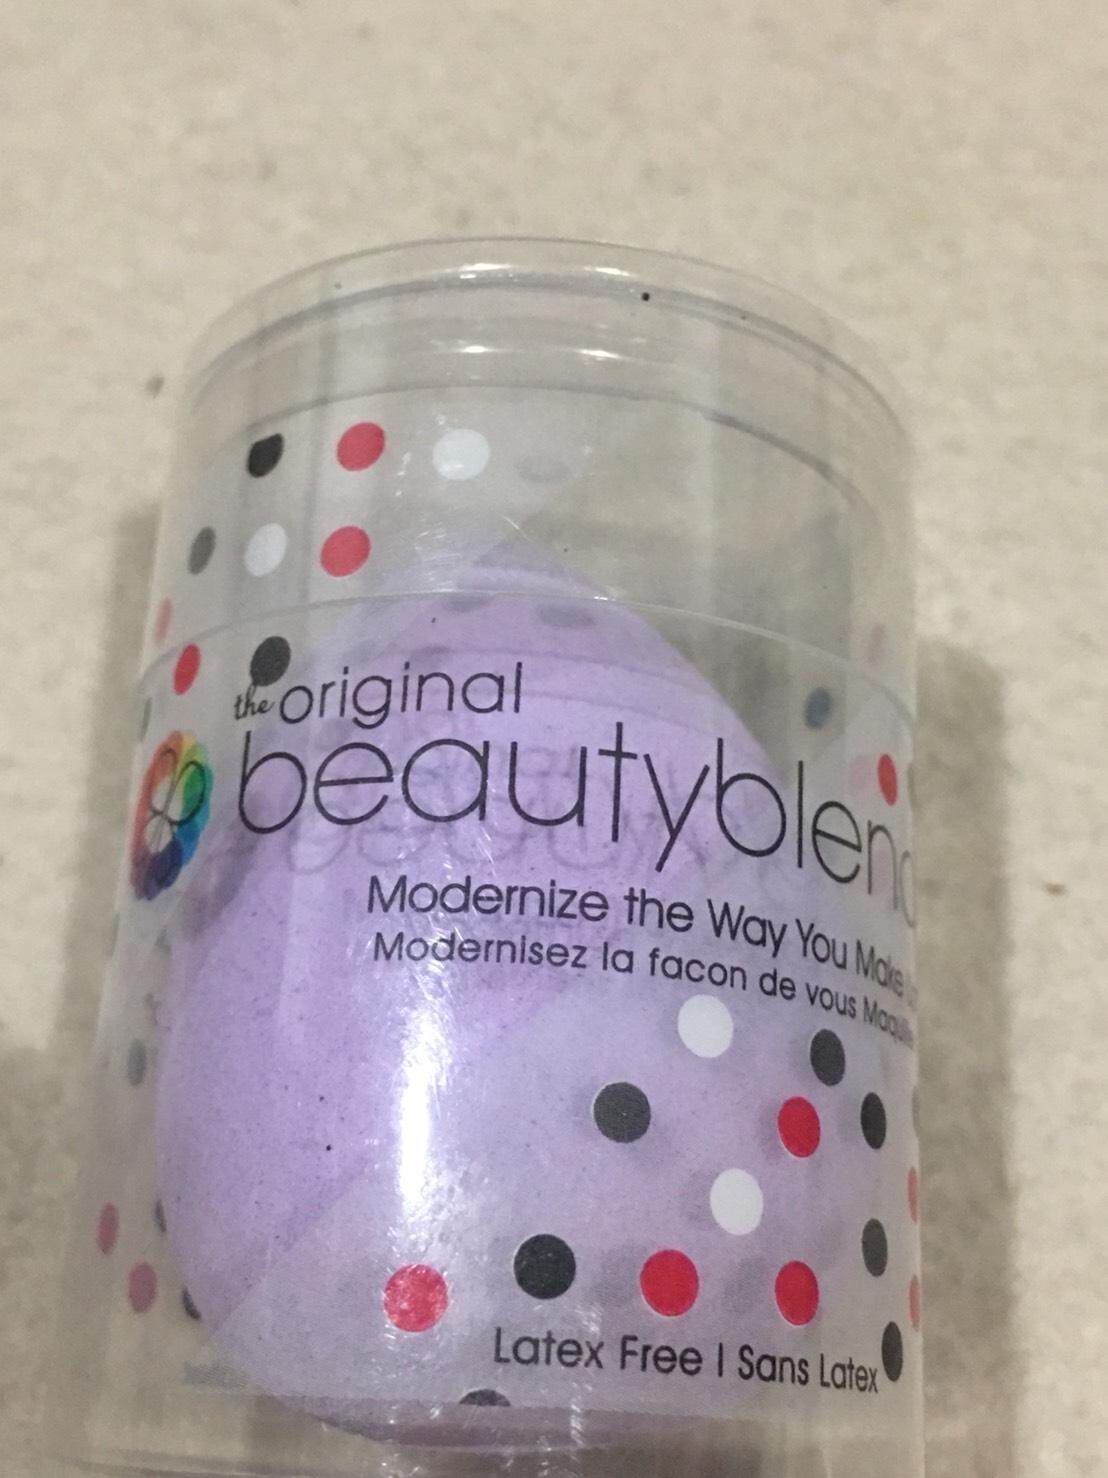 BeautyBlender Original - intl ✿ฟองน้ำแต่งหน้า-เกลี่ยรองพื้น รูปไข่✿